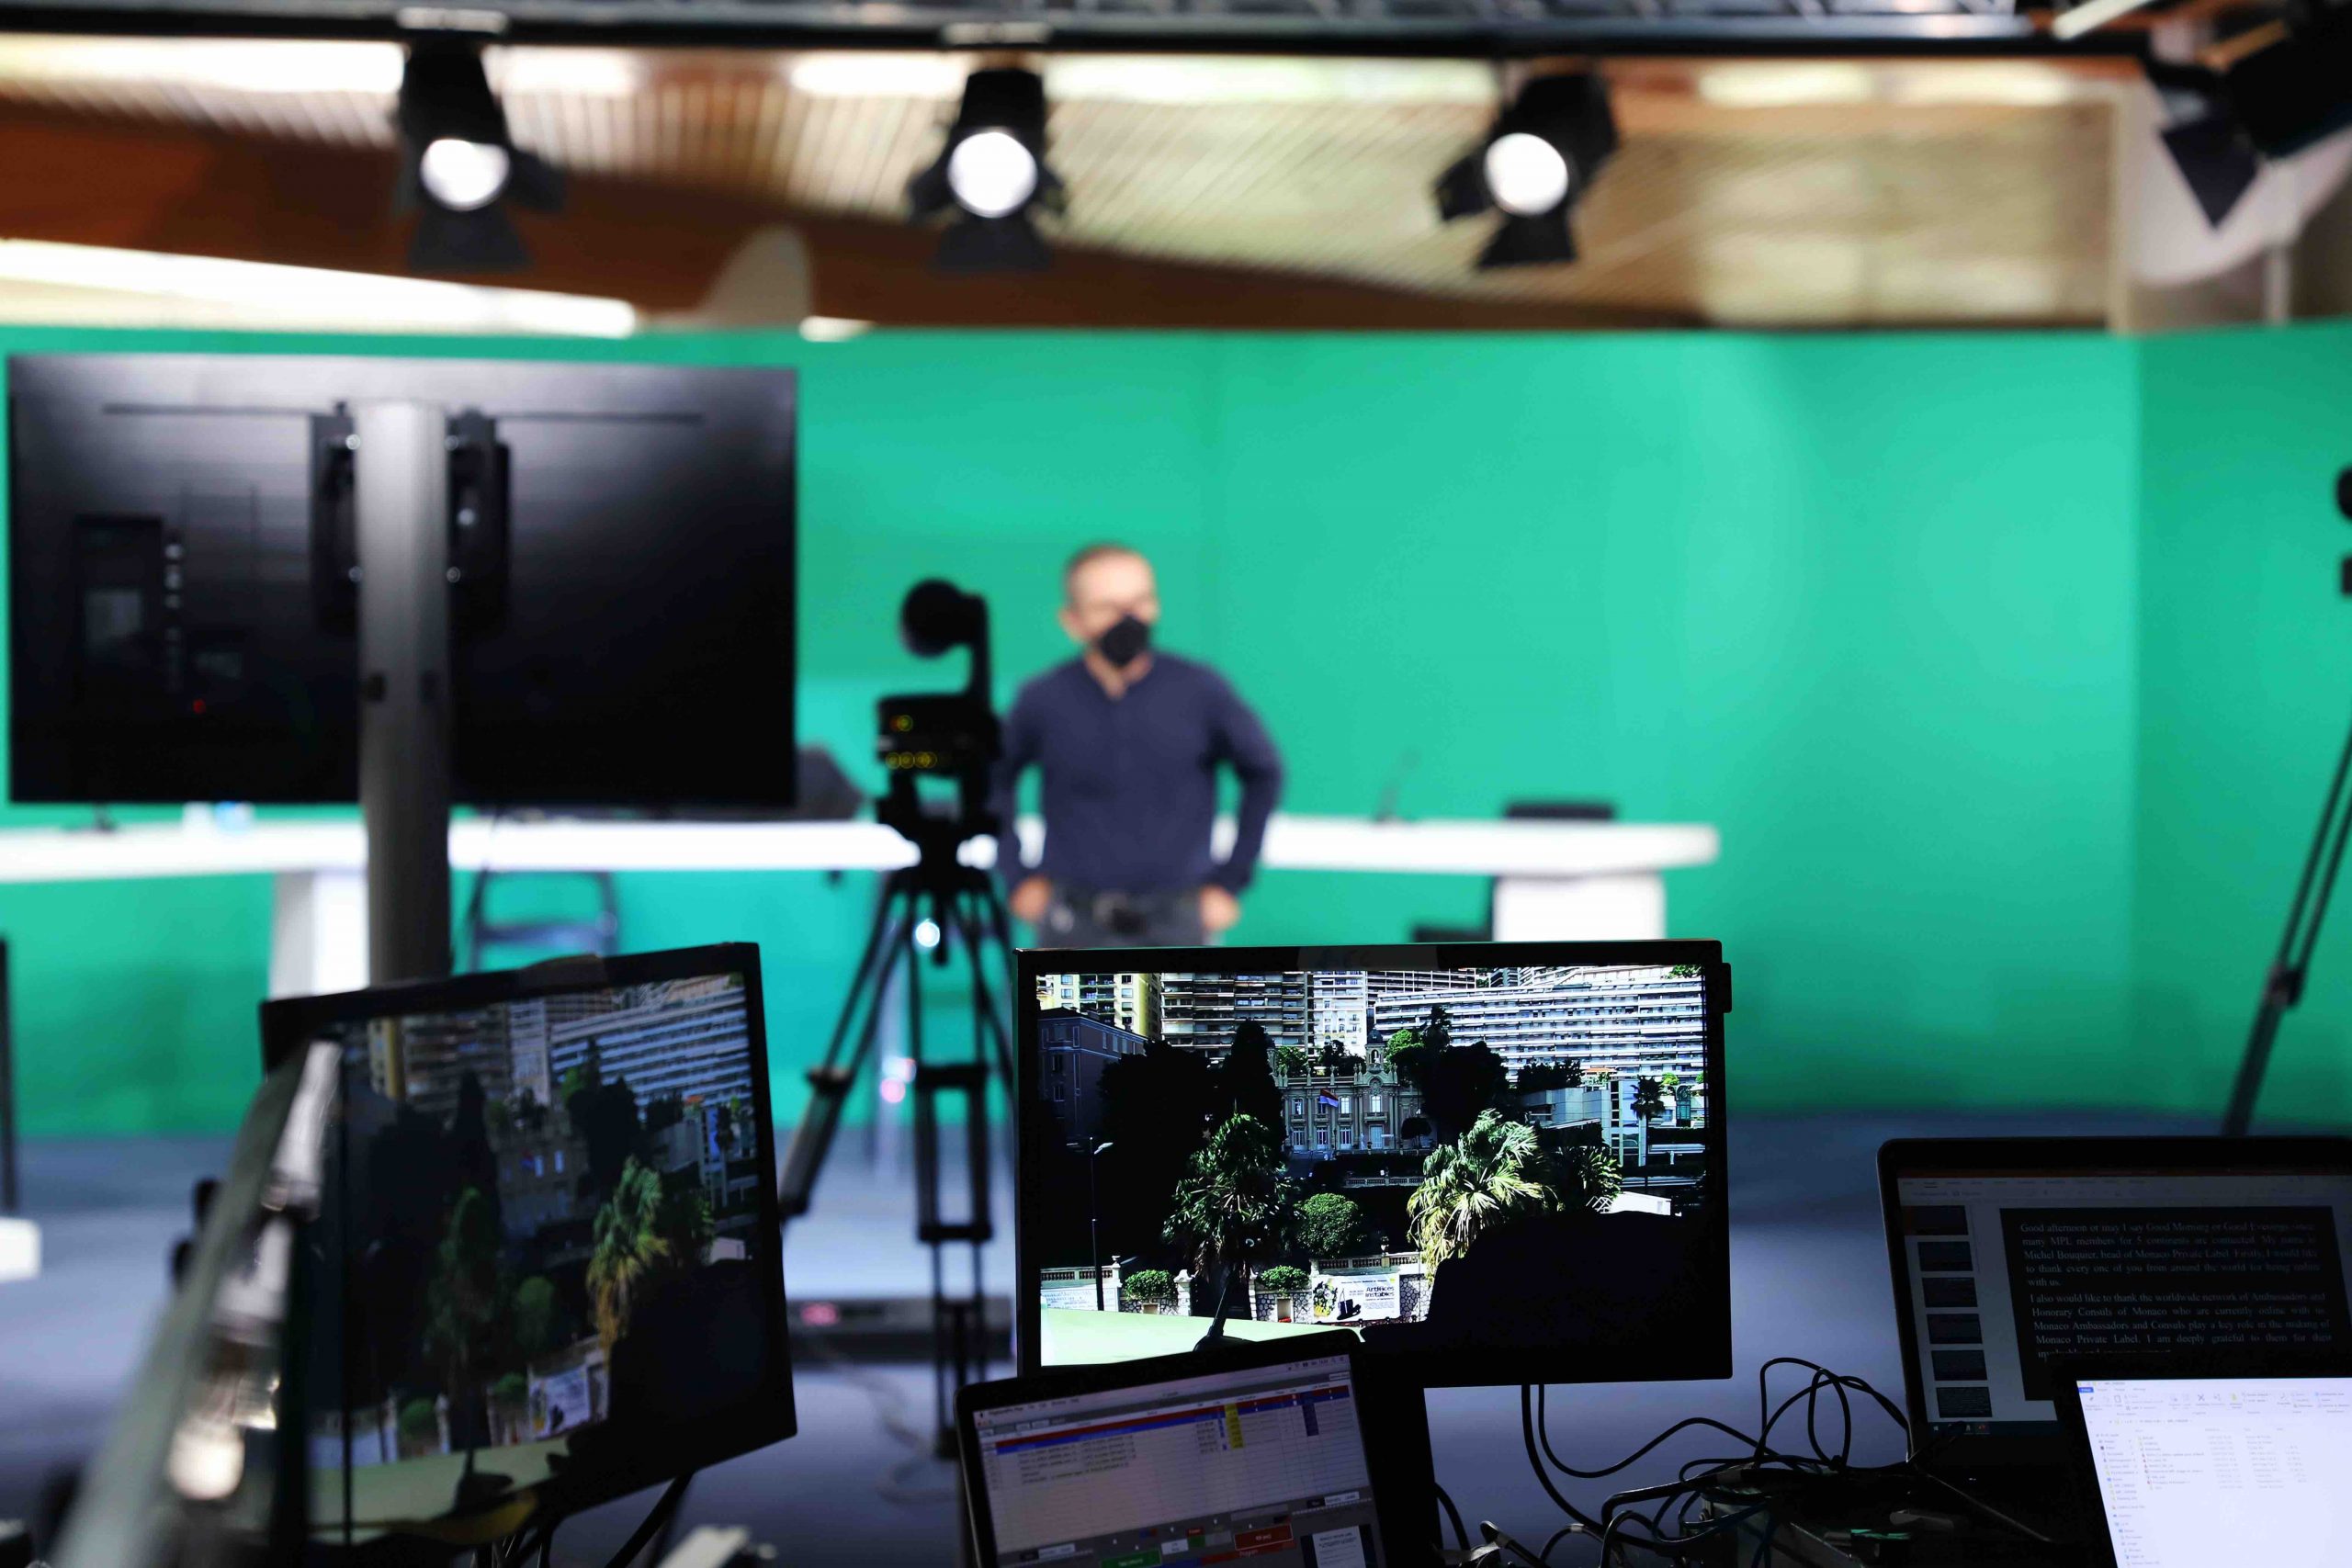 Grimaldi Forum Monaco is setting up a streaming studio